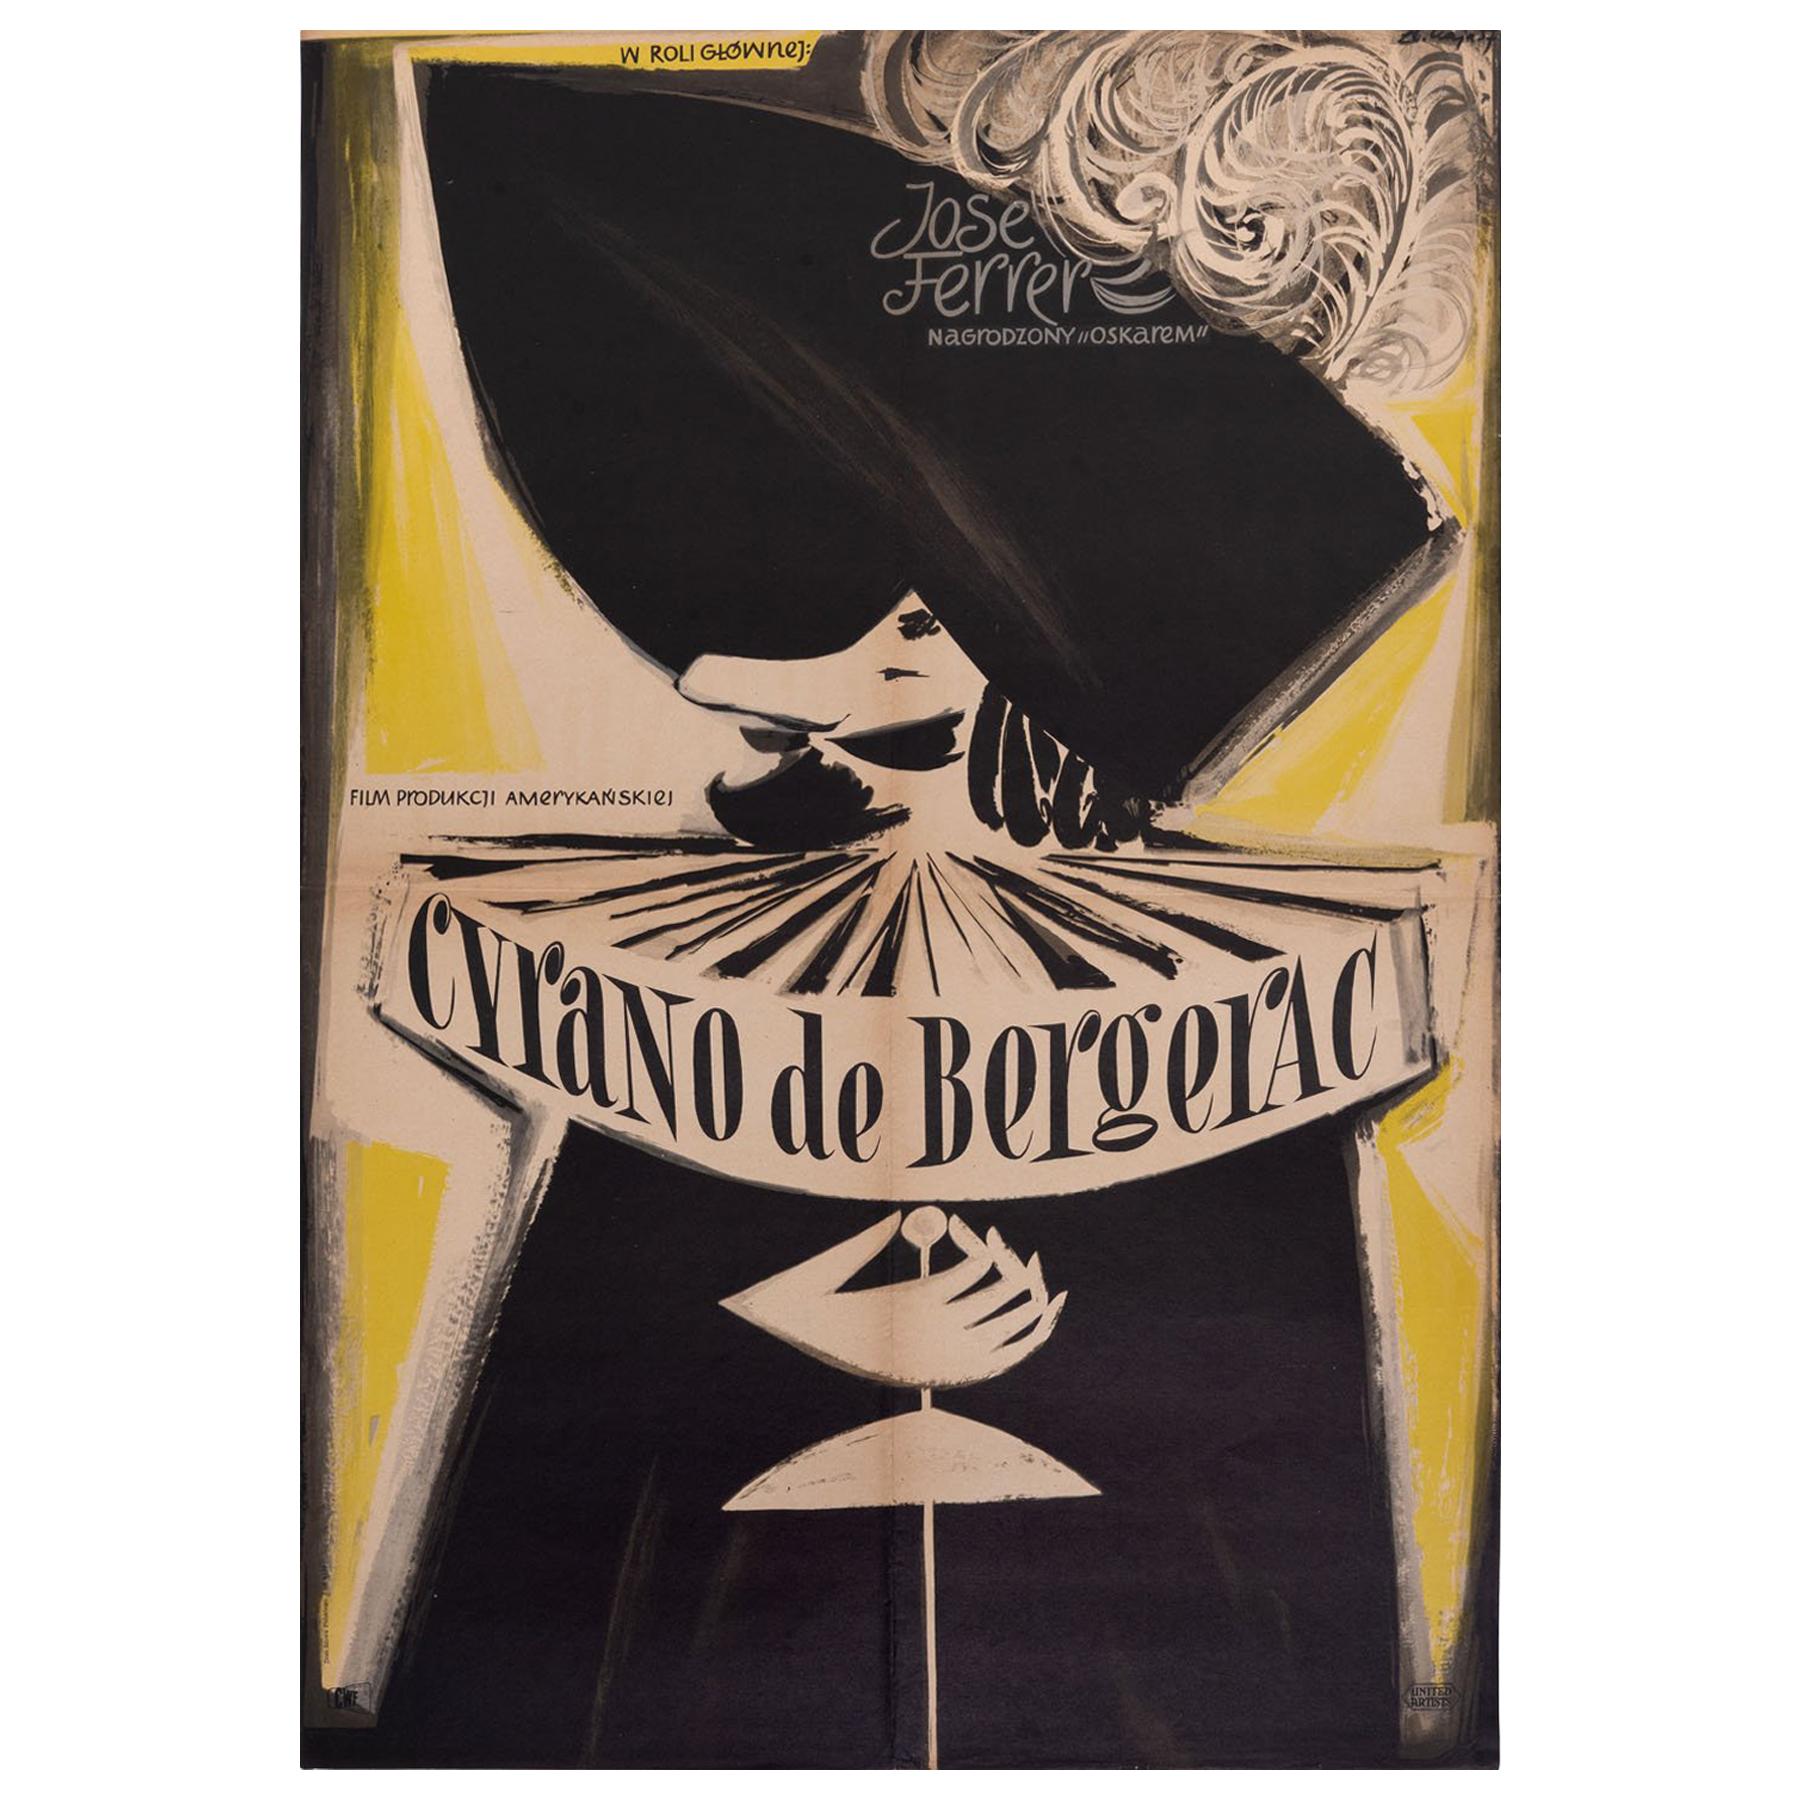 Vintage Polish Cyrano de Bergerac Movie Poster by Zbigniew Kaja for CWF, 1958 For Sale